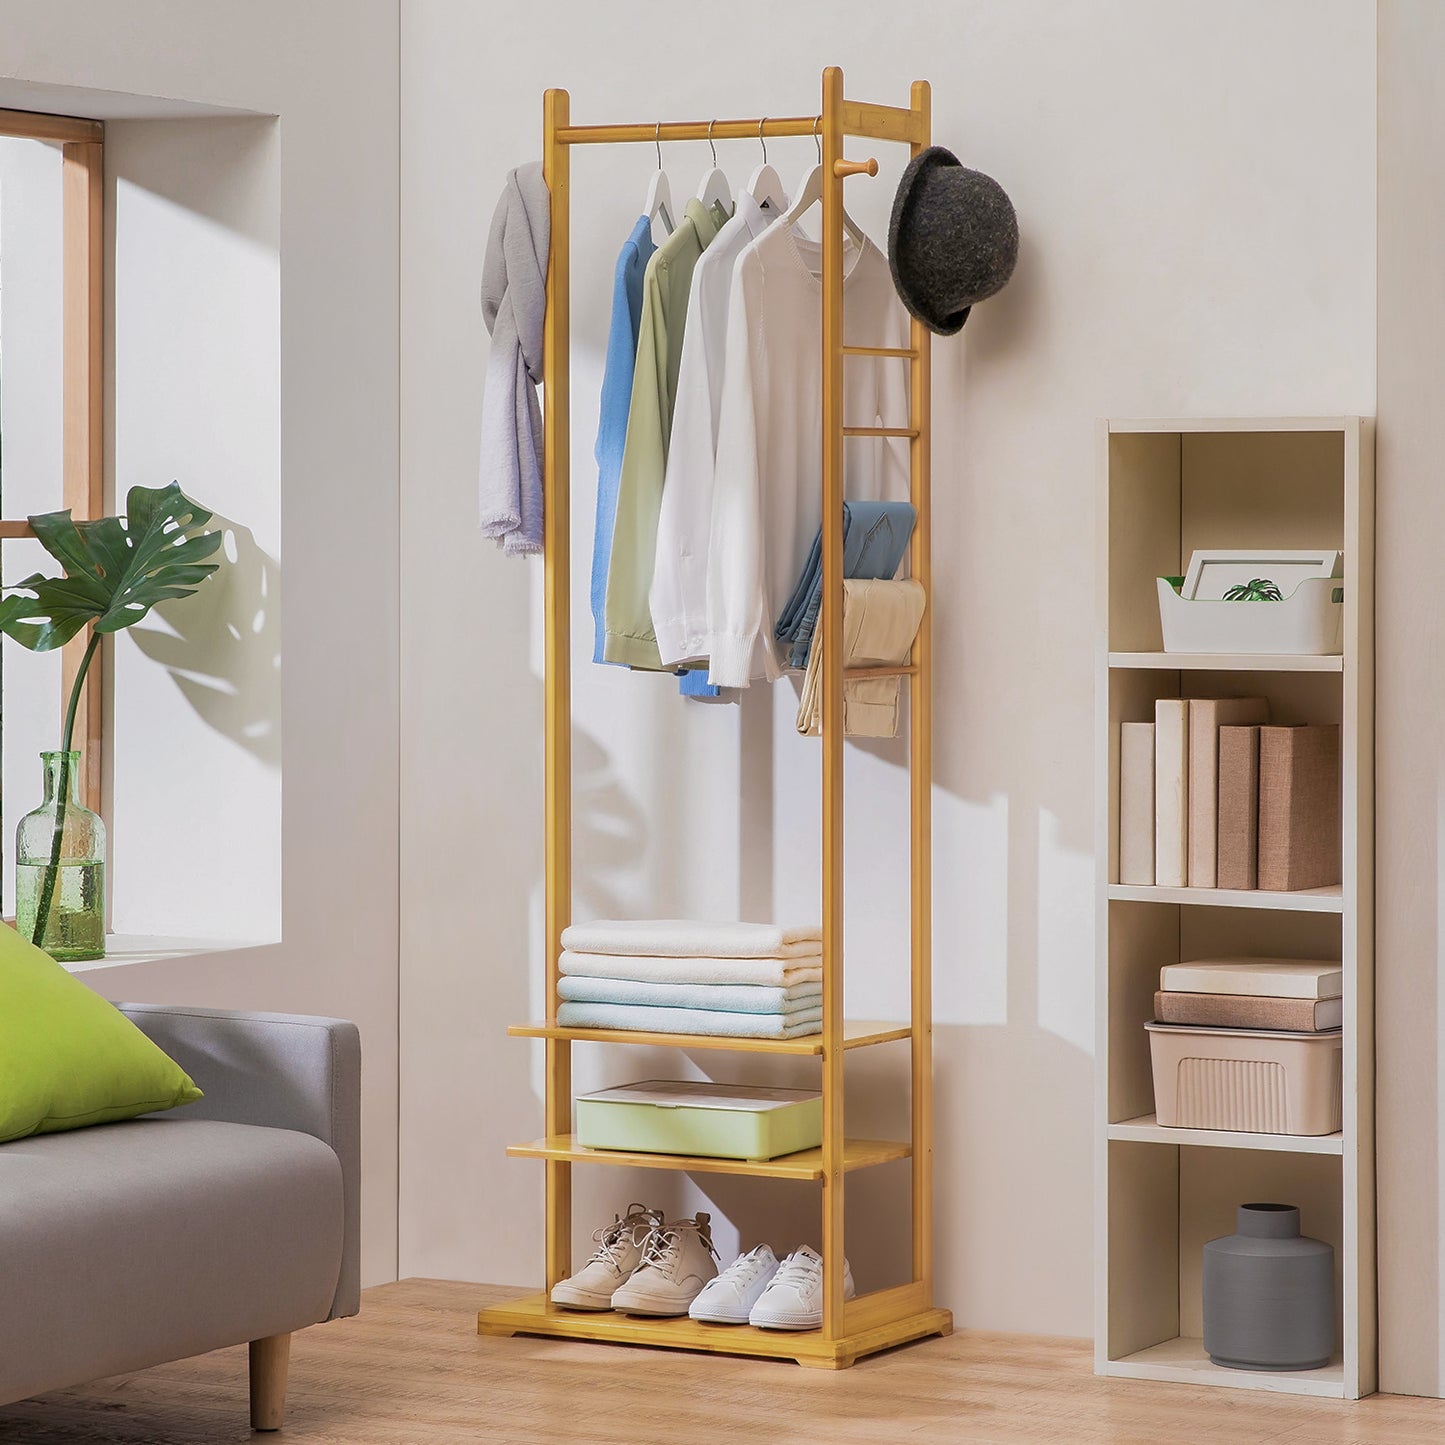 Garment Hanging Stand Rack - 3 Tier Shelves